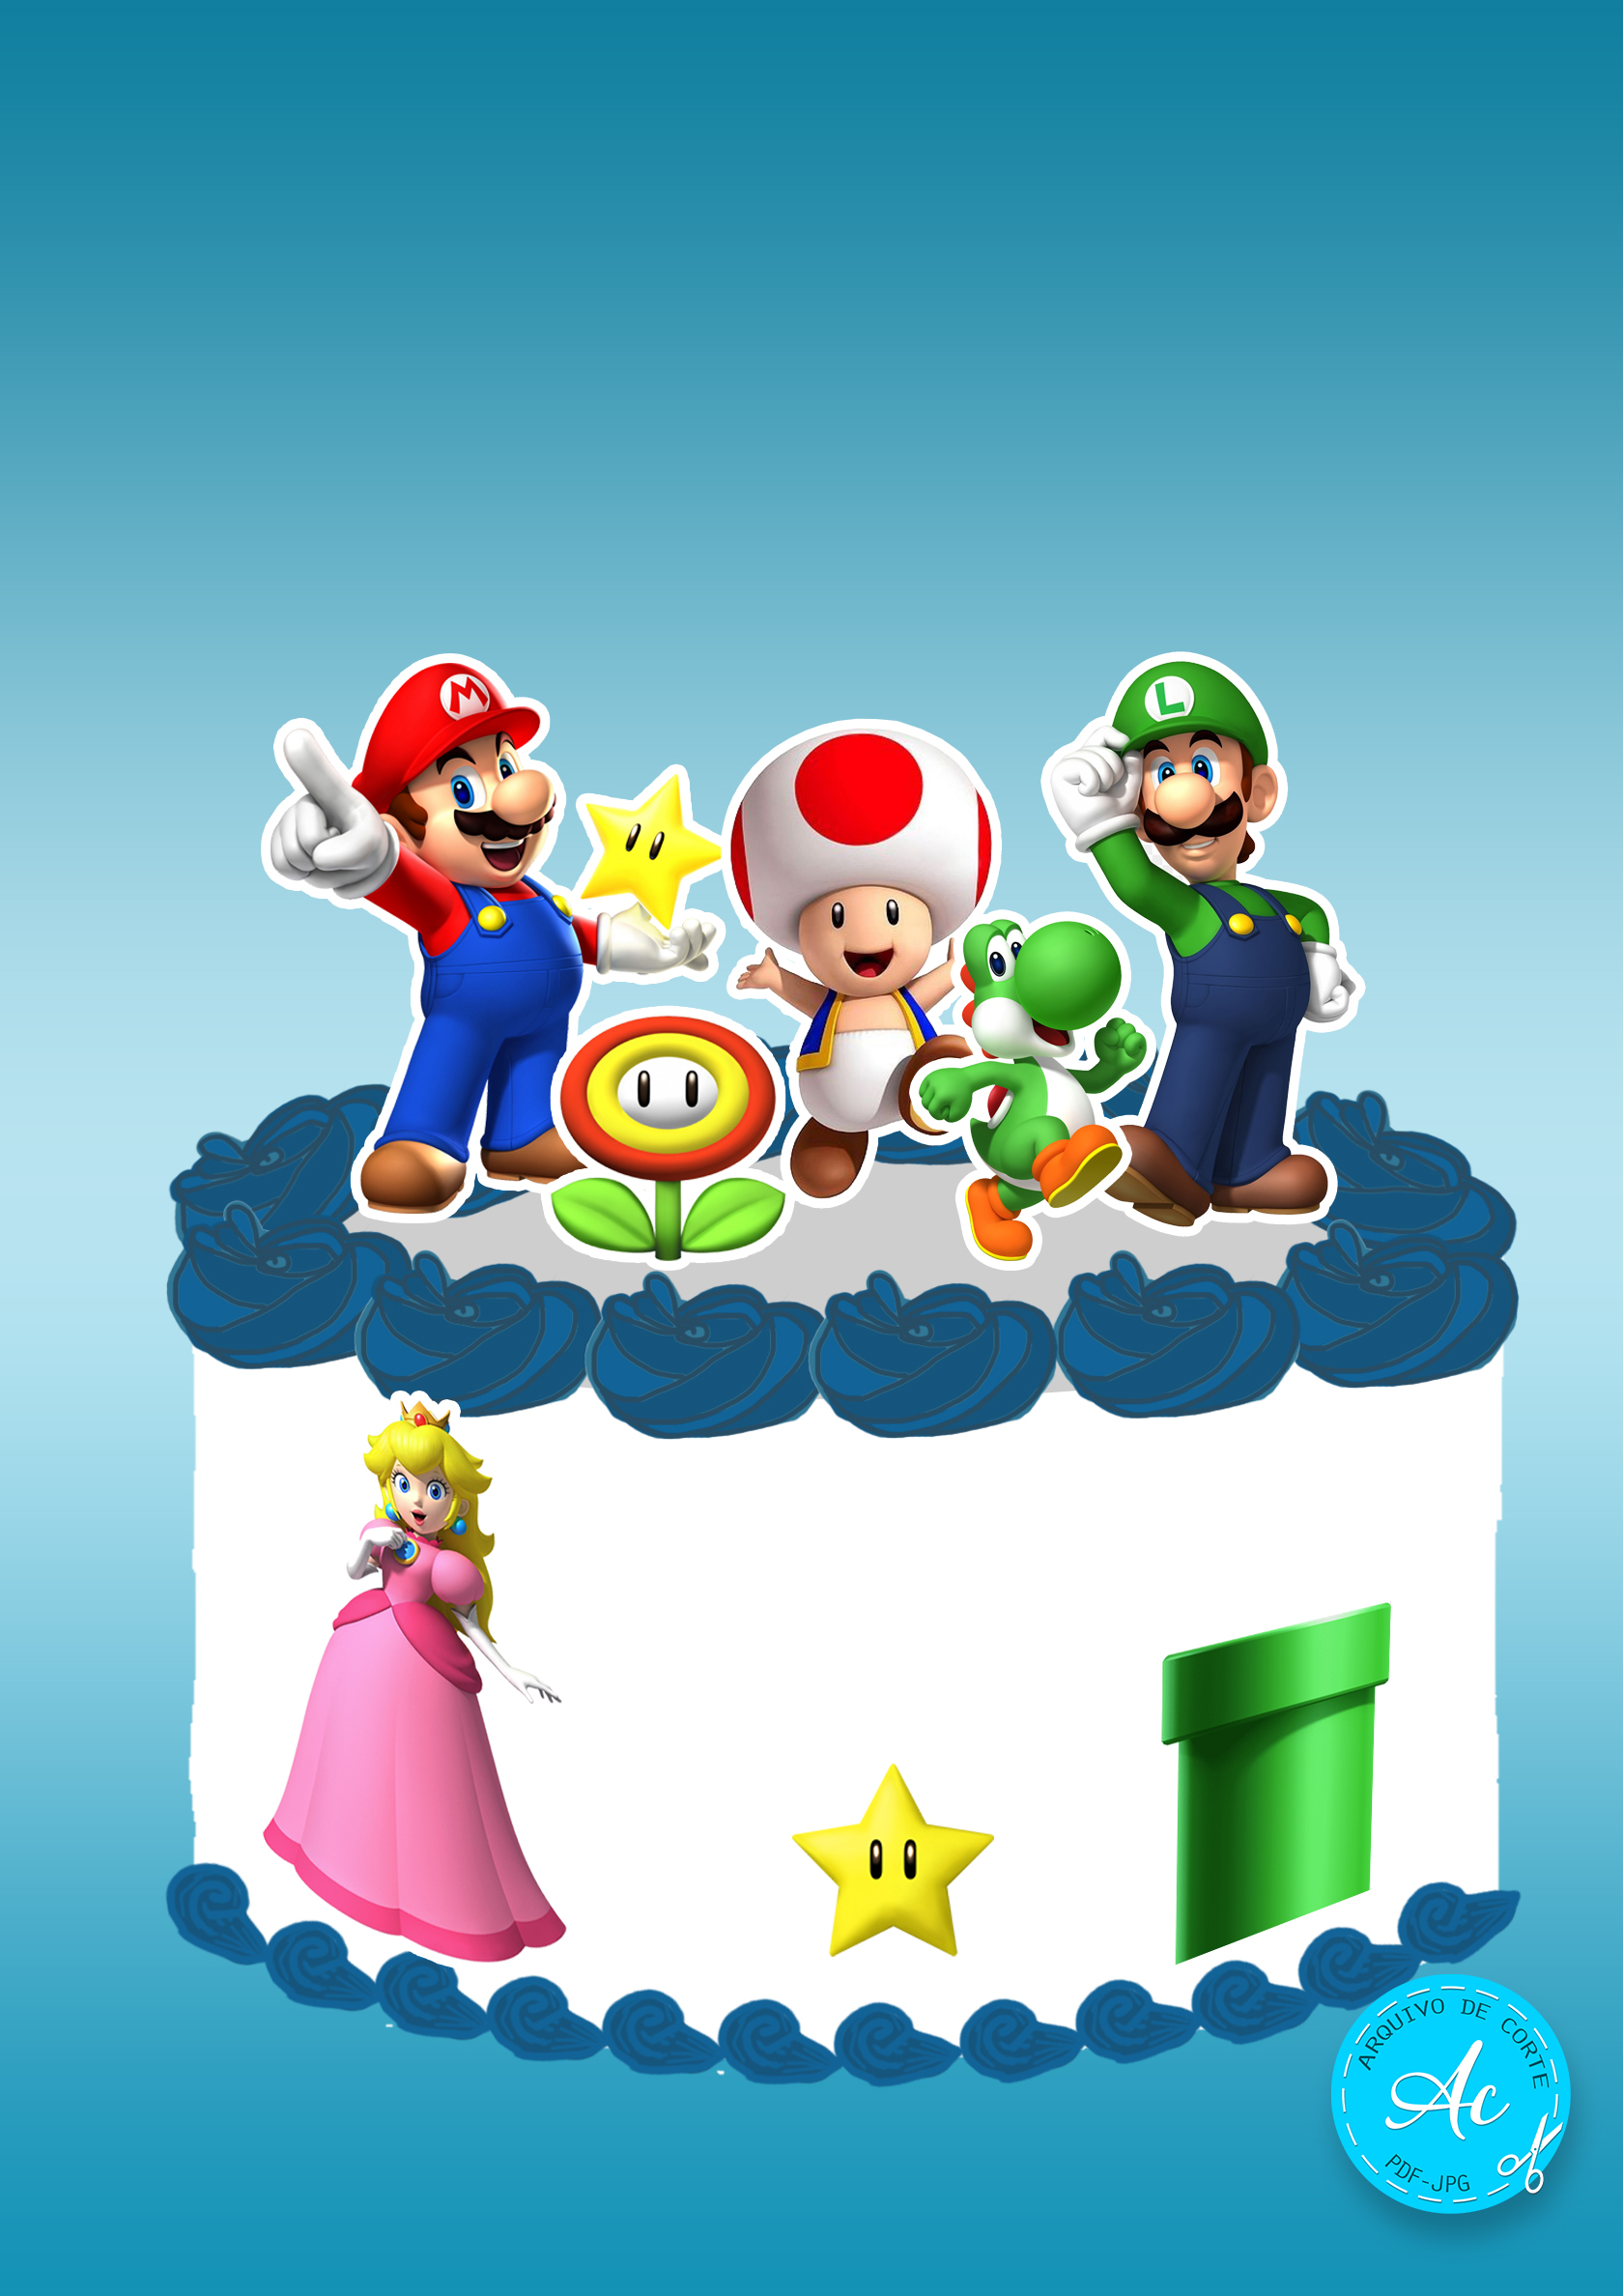 Super Mario Bros #1 - Inicio do jogo 